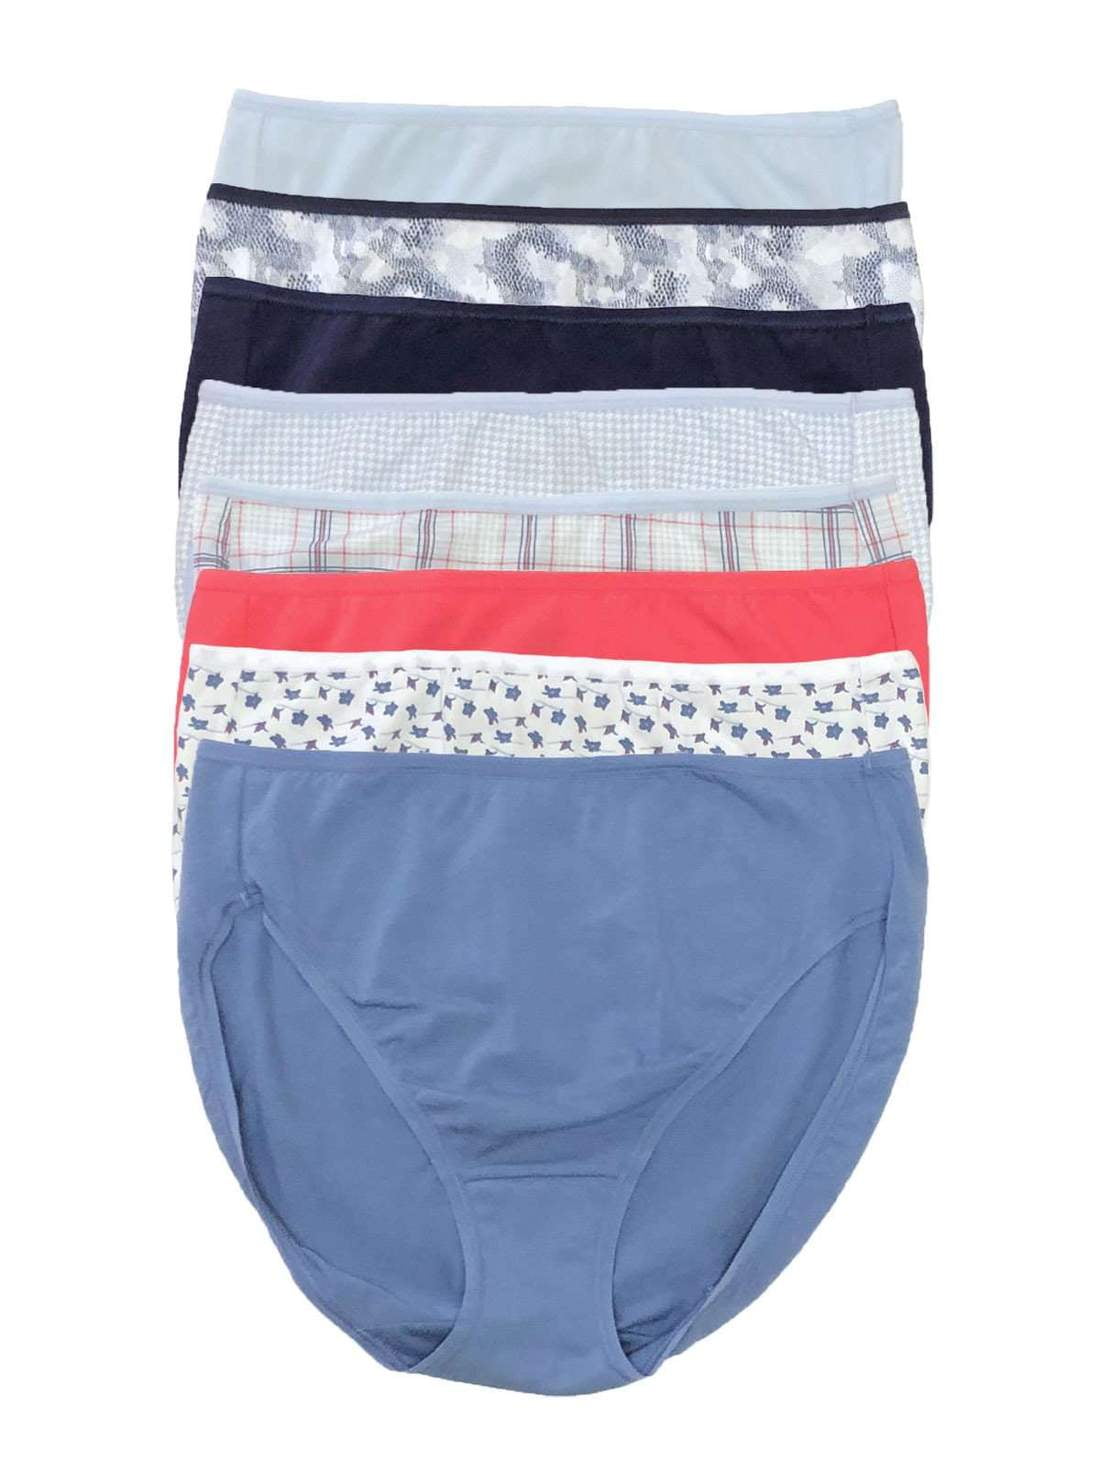 Felina Cotton Modal Hi Cut Panties - Sexy Lingerie Panties for Women -  Underwear for Women 8-Pack (Midsummer Essentials, X-Large) 